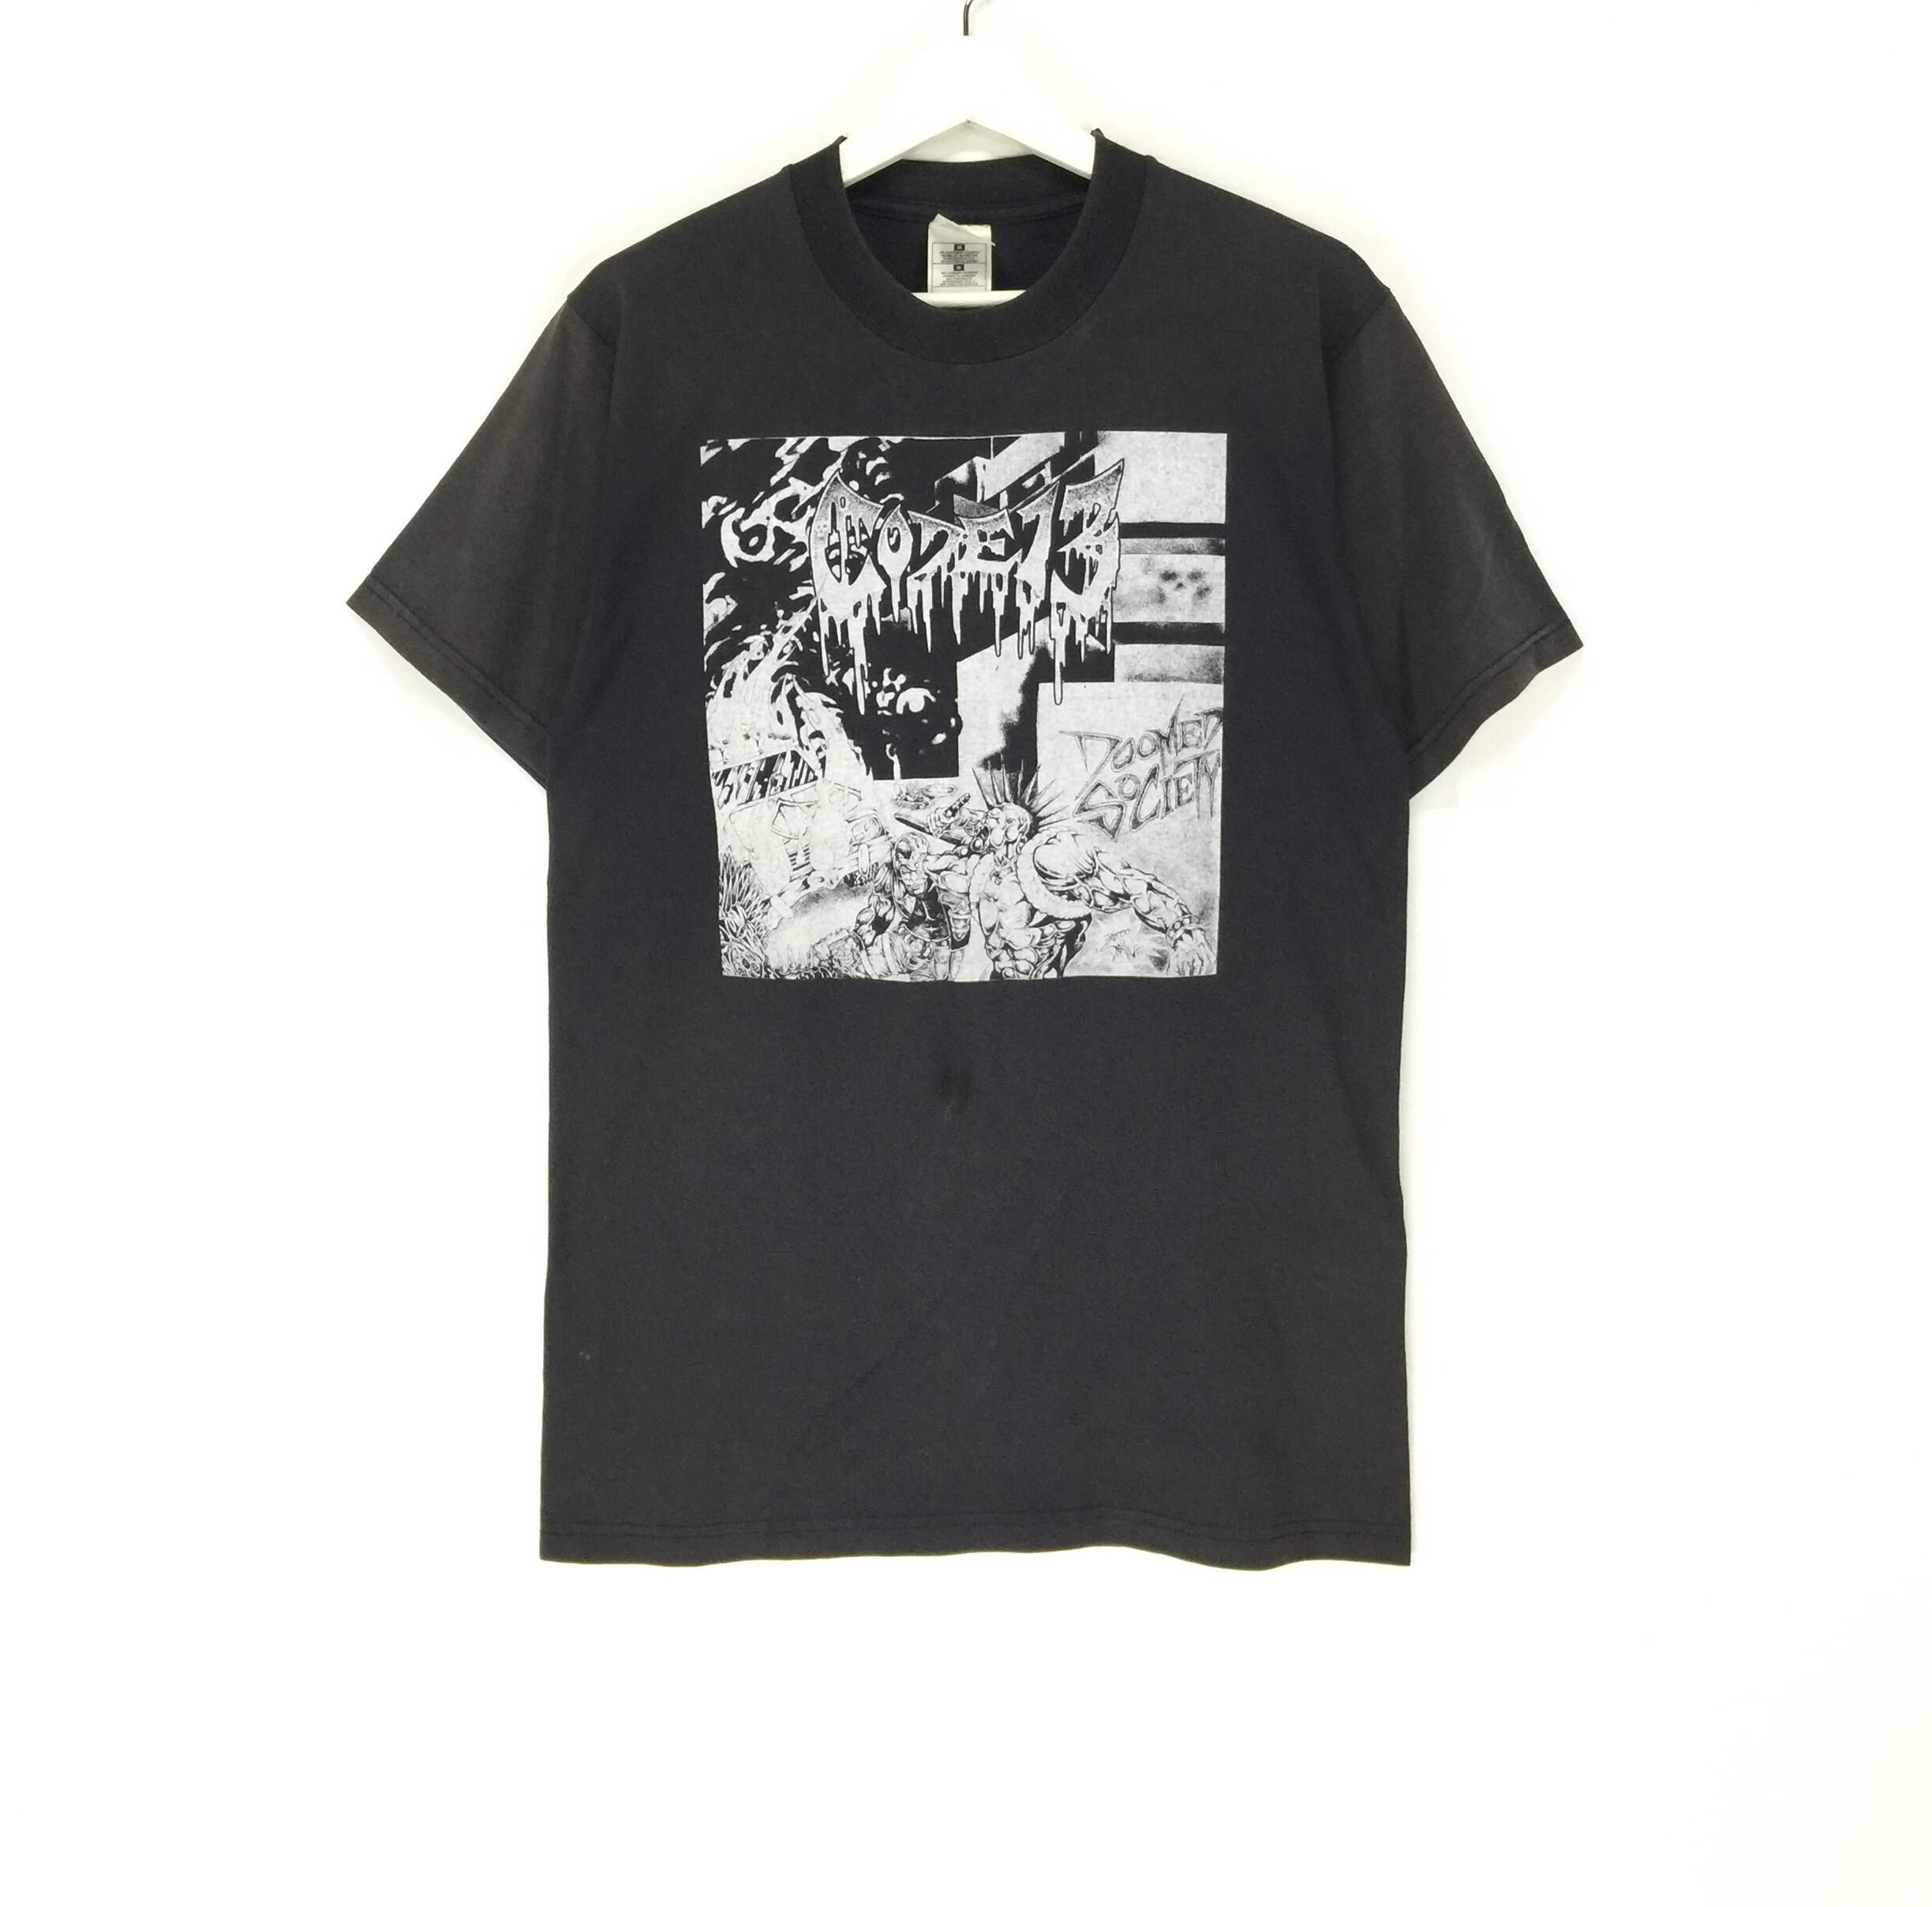 Rare Code 13 doomed society vintage 90s shirt/destroy/crust | Etsy